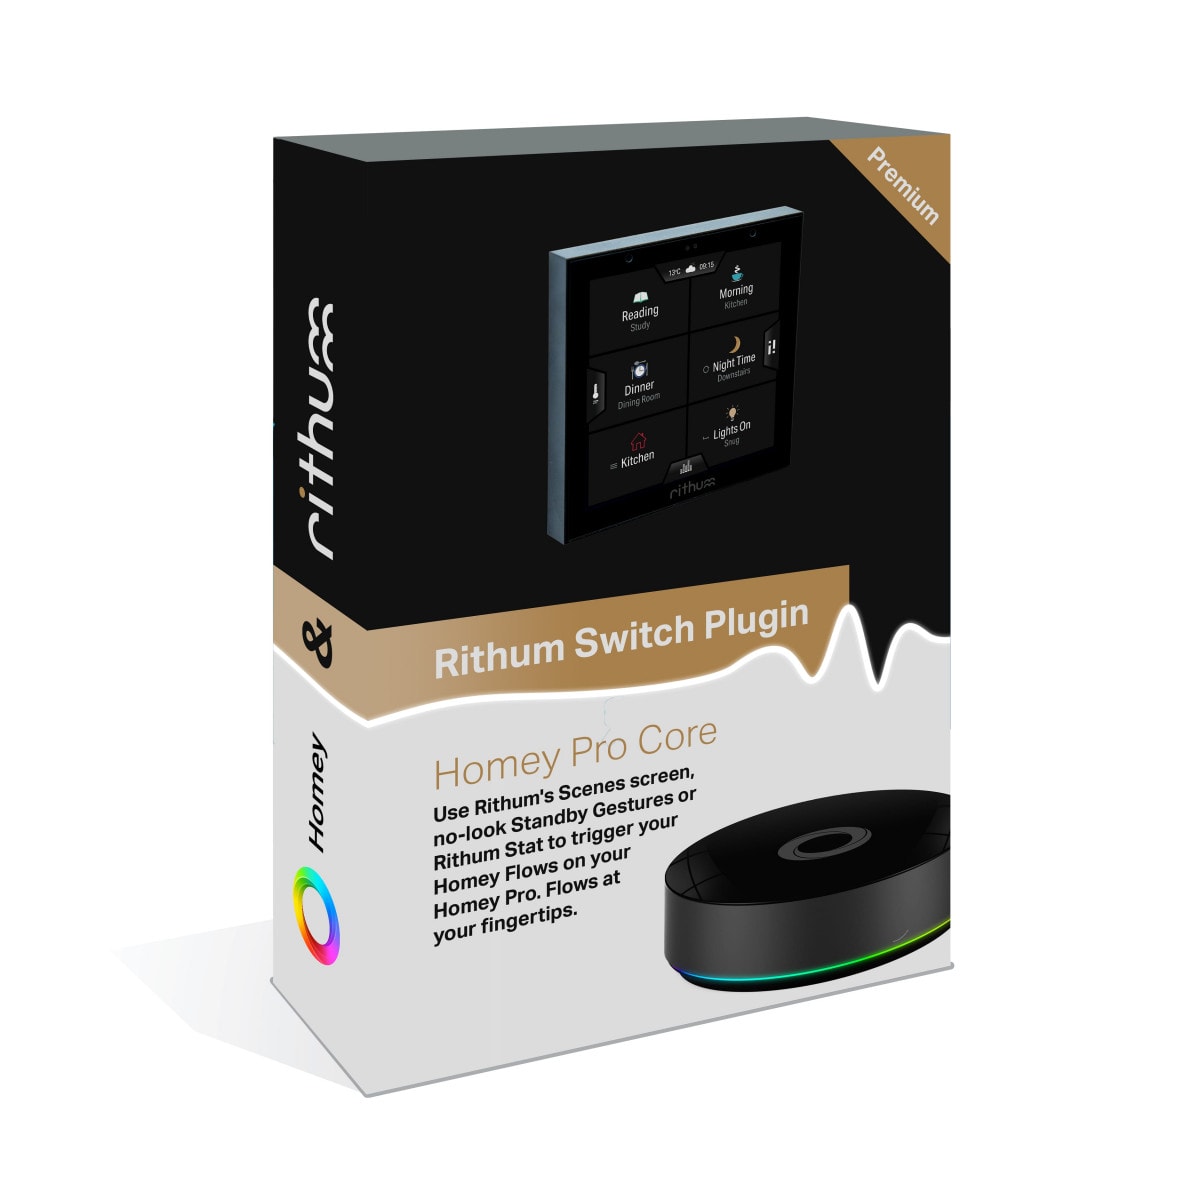 Rithum Switch Homey Pro Core Plugin